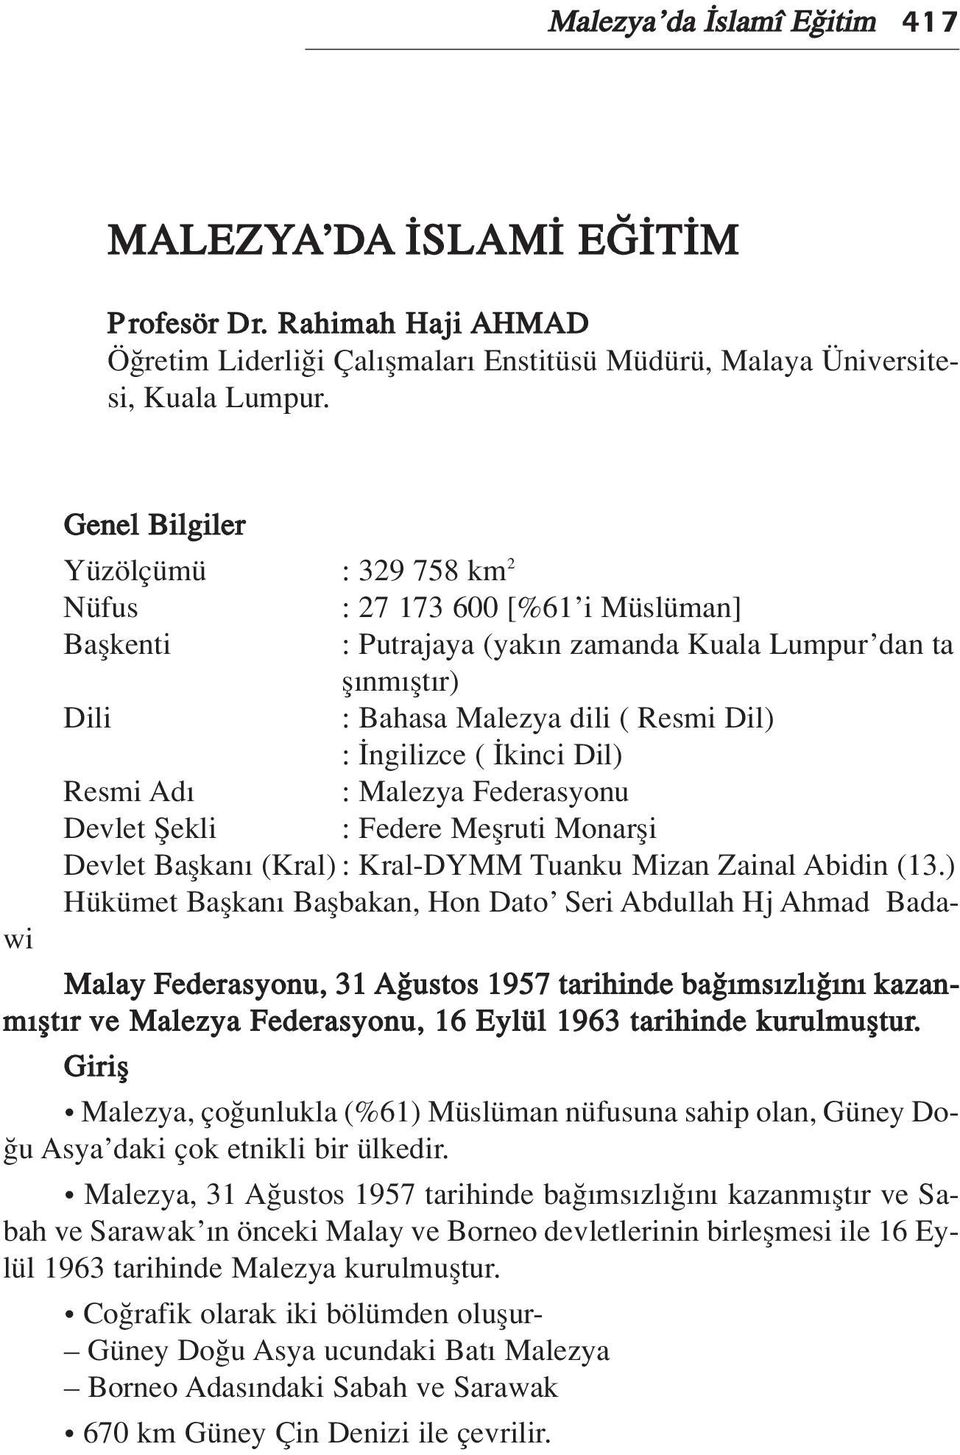 kinci Dil) Resmi Ad : Malezya Federasyonu Devlet fiekli : Federe Meflruti Monarfli Devlet Baflkan (Kral) : Kral-DYMM Tuanku Mizan Zainal Abidin (13.